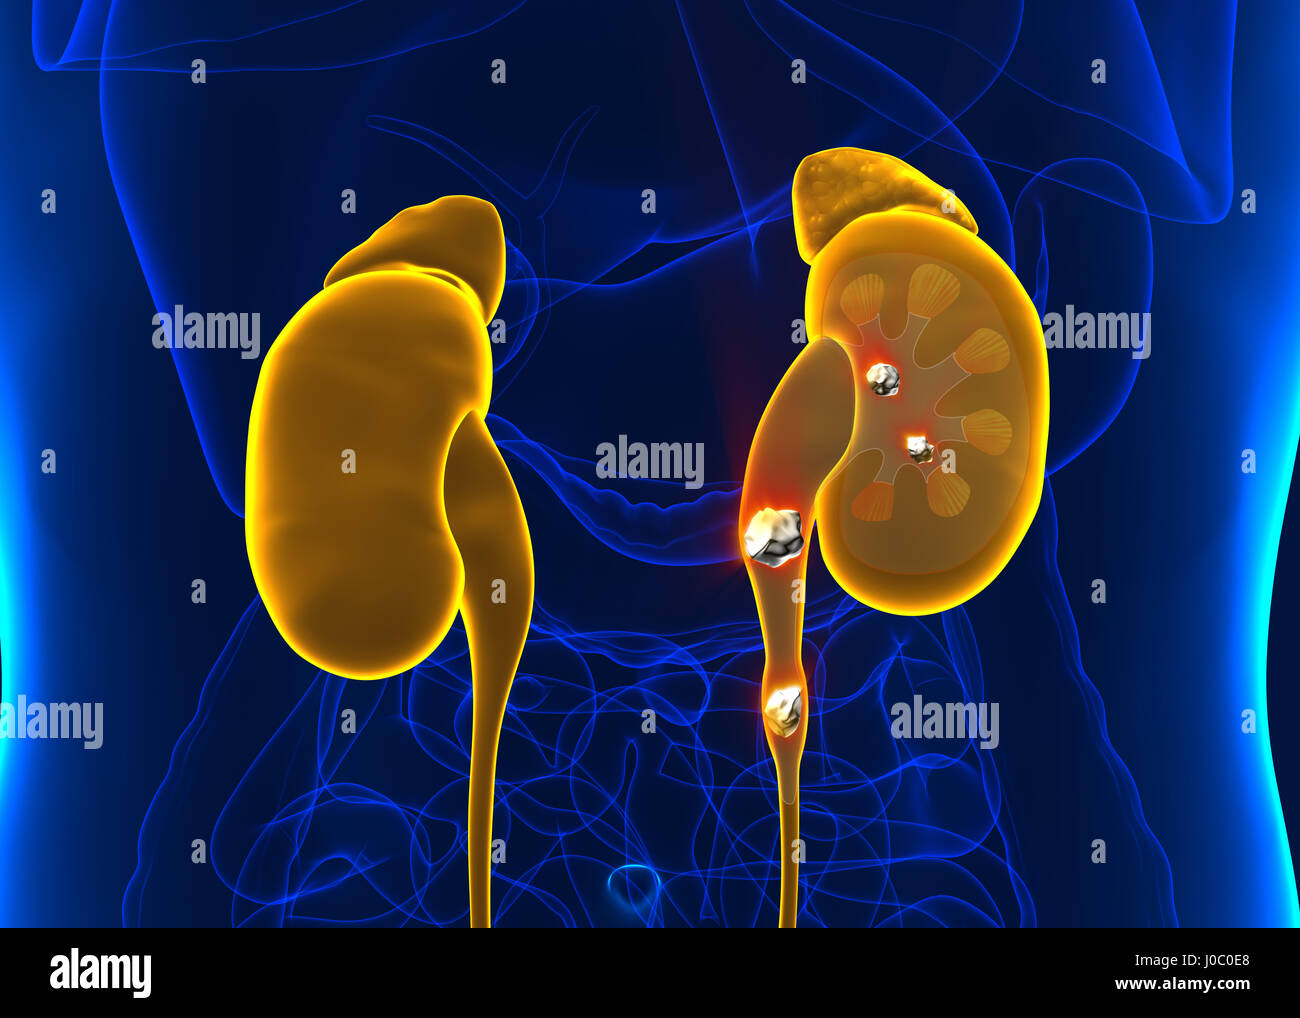 Kidney stones anatomy pain male internal organ painful cristaline mineral cross section - 3d illustration Stock Photo